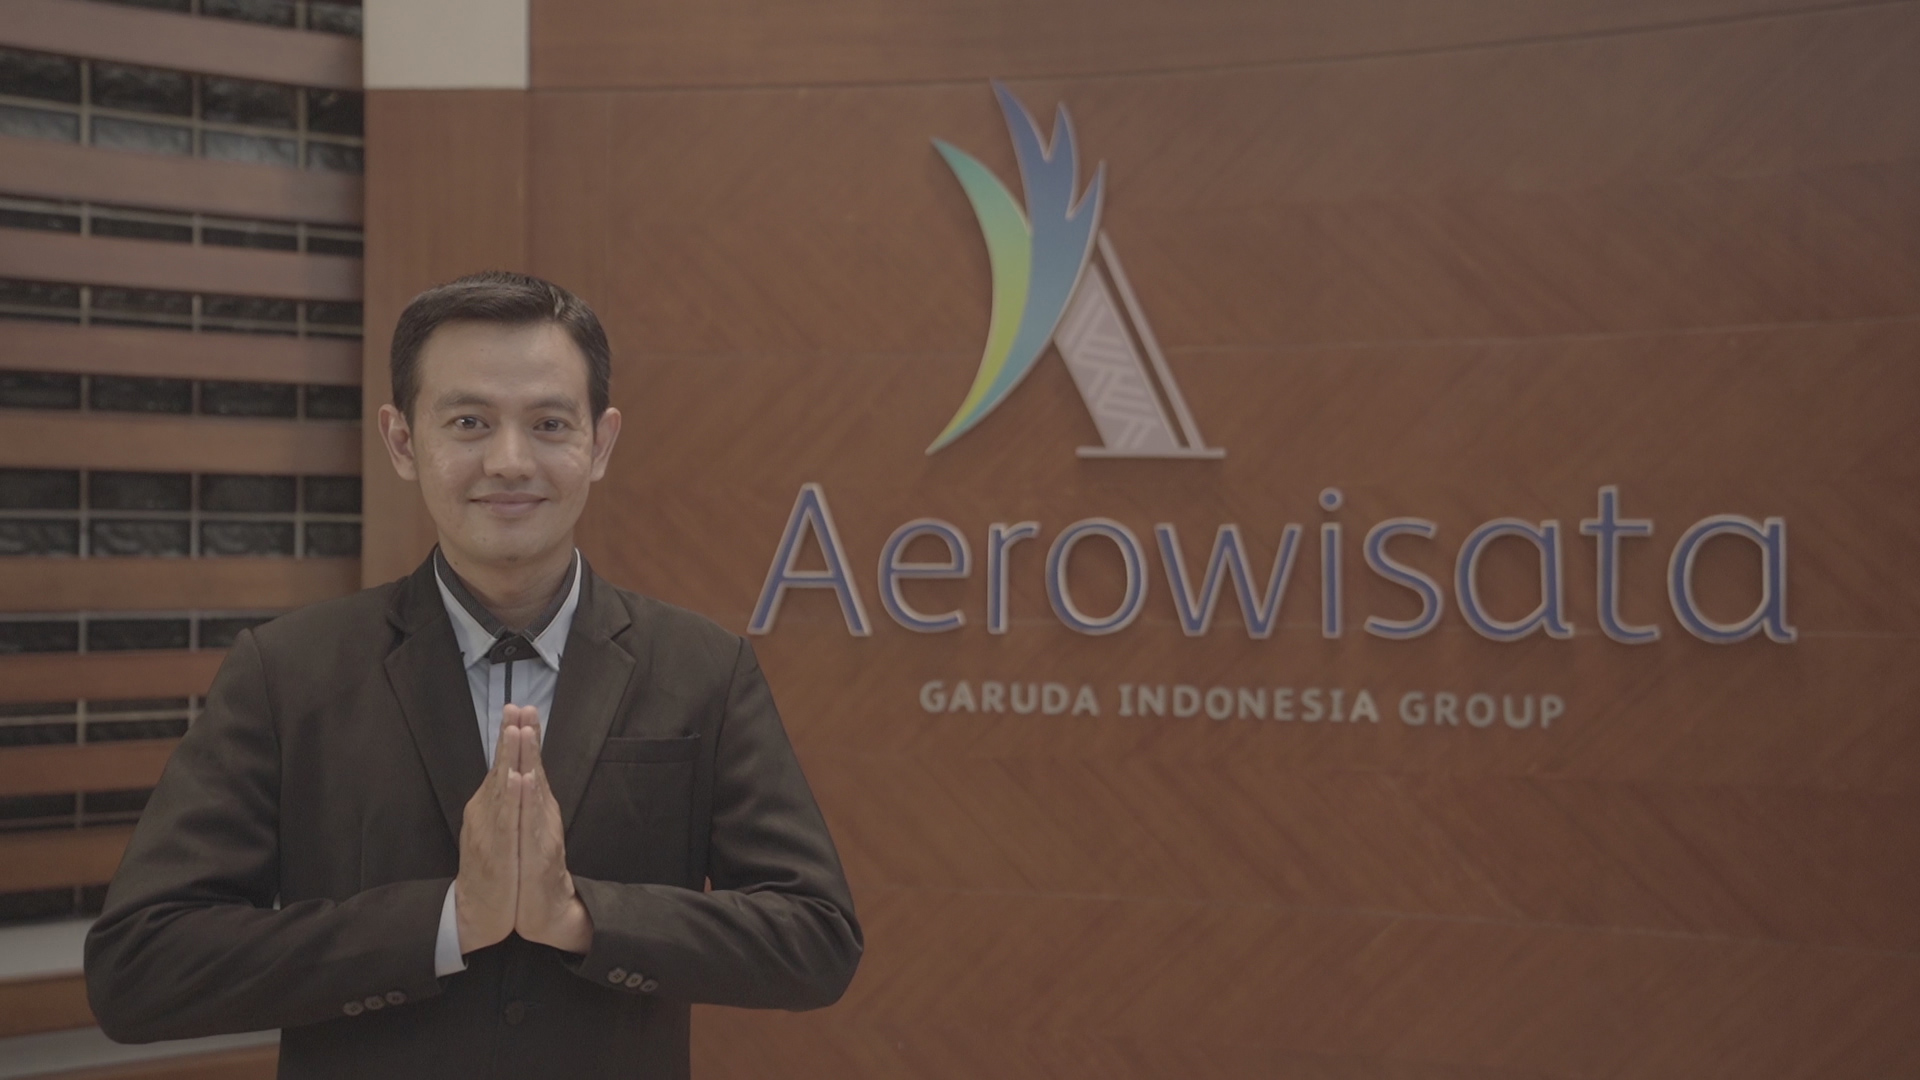 Aerowisata Group Profile